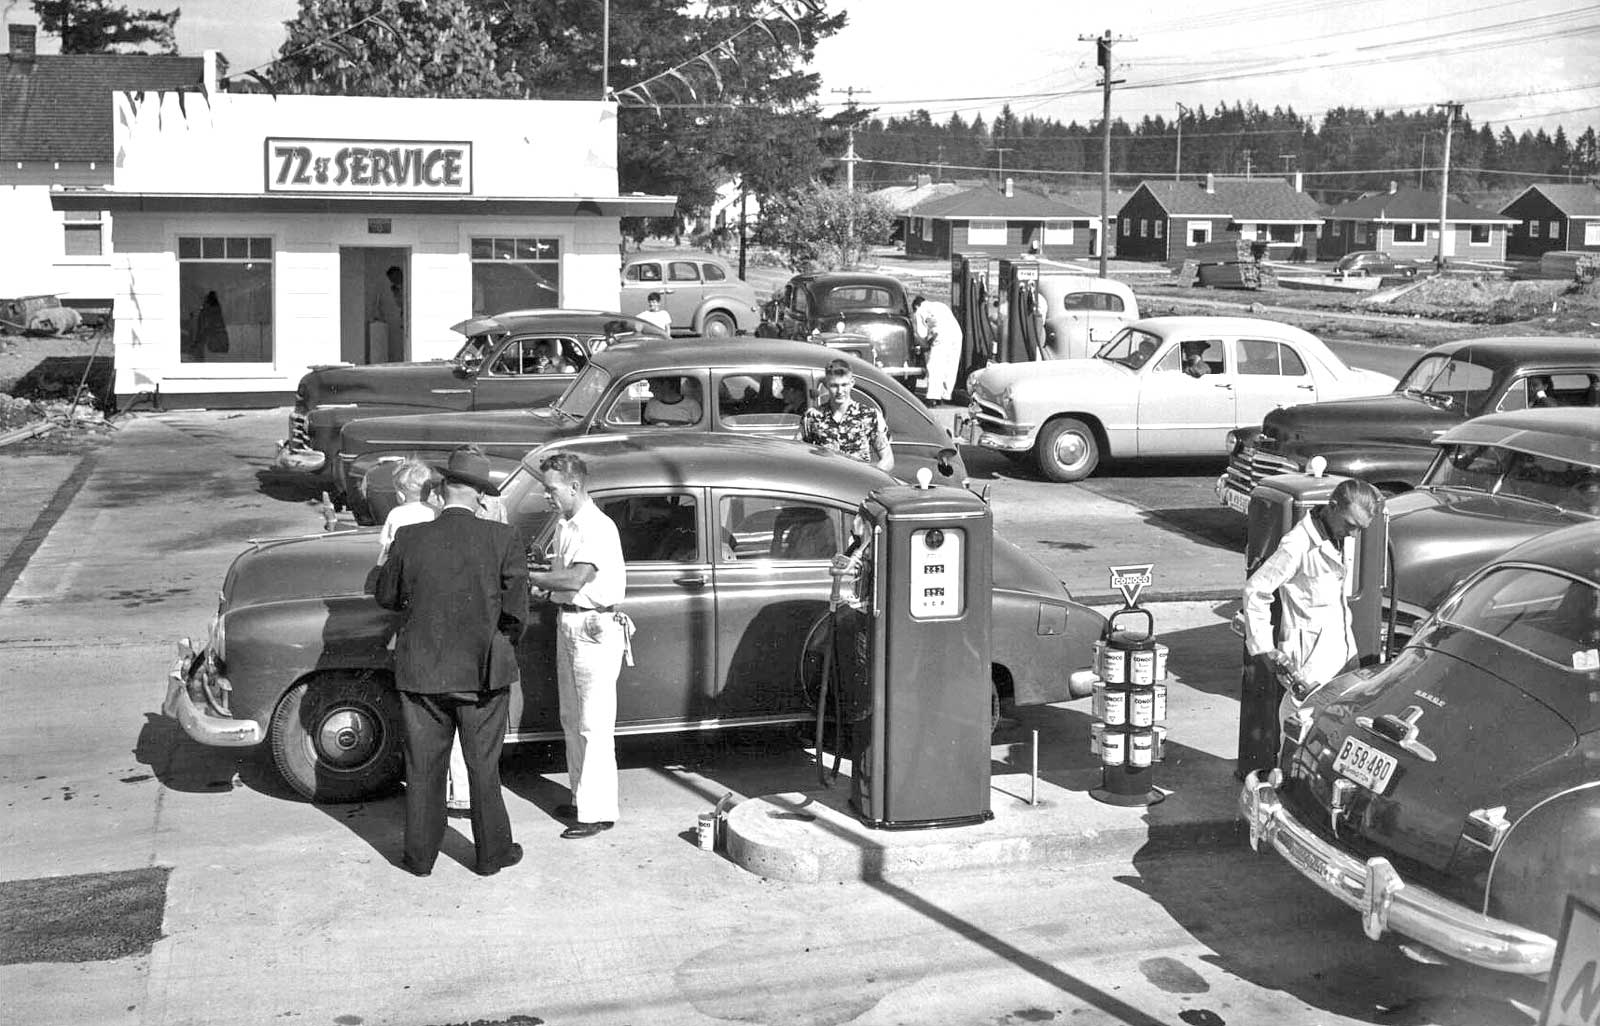 Conoco-Servive-Station-1950s-Cars.jpg